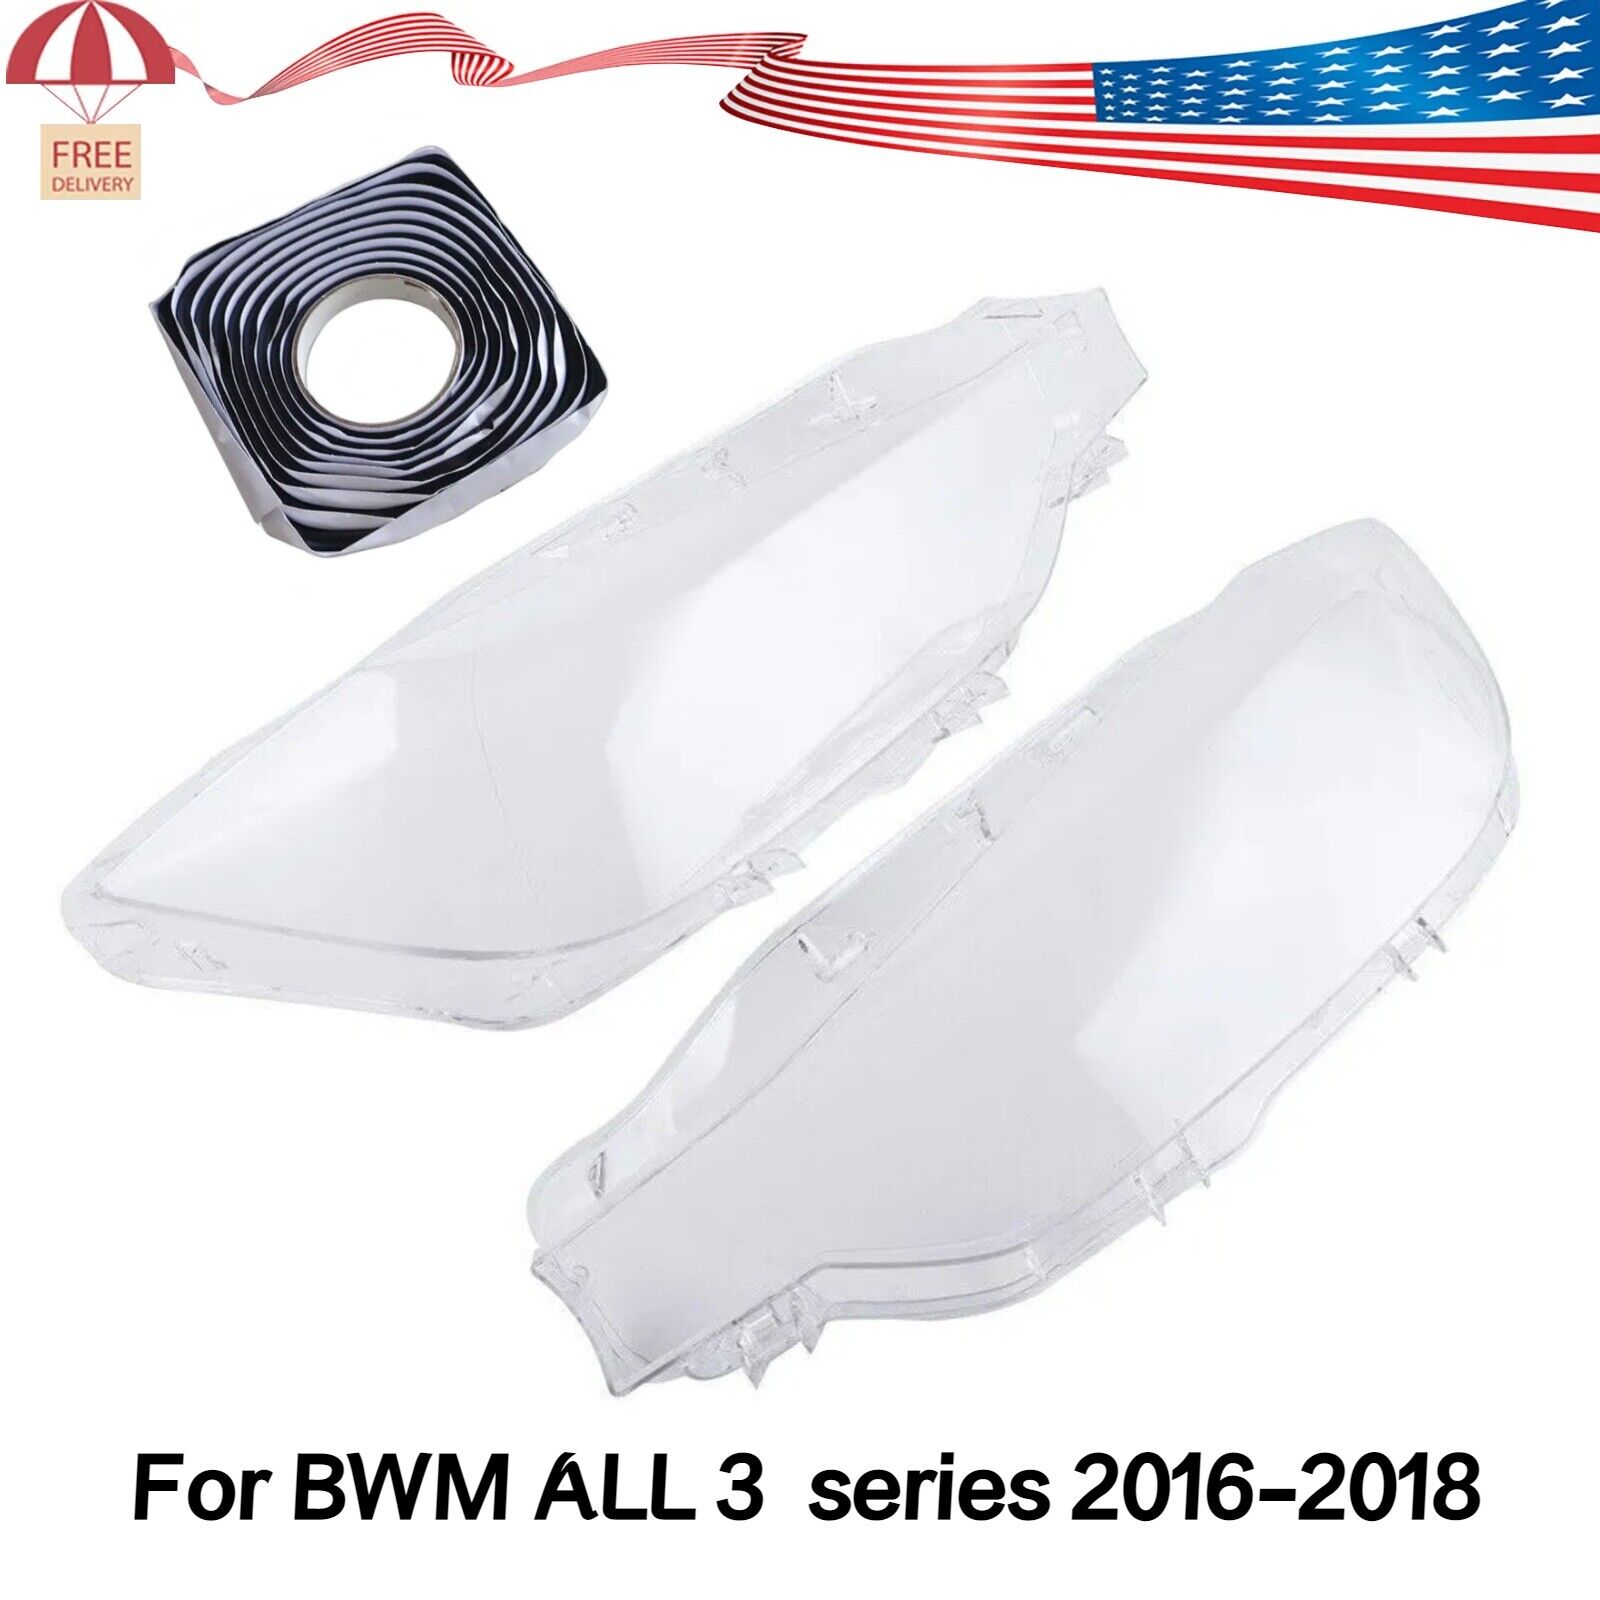 LED Headlight Headlamp Lens Cover + Glue Fit BMW F30 F31 2016 2017 2018 3 Series